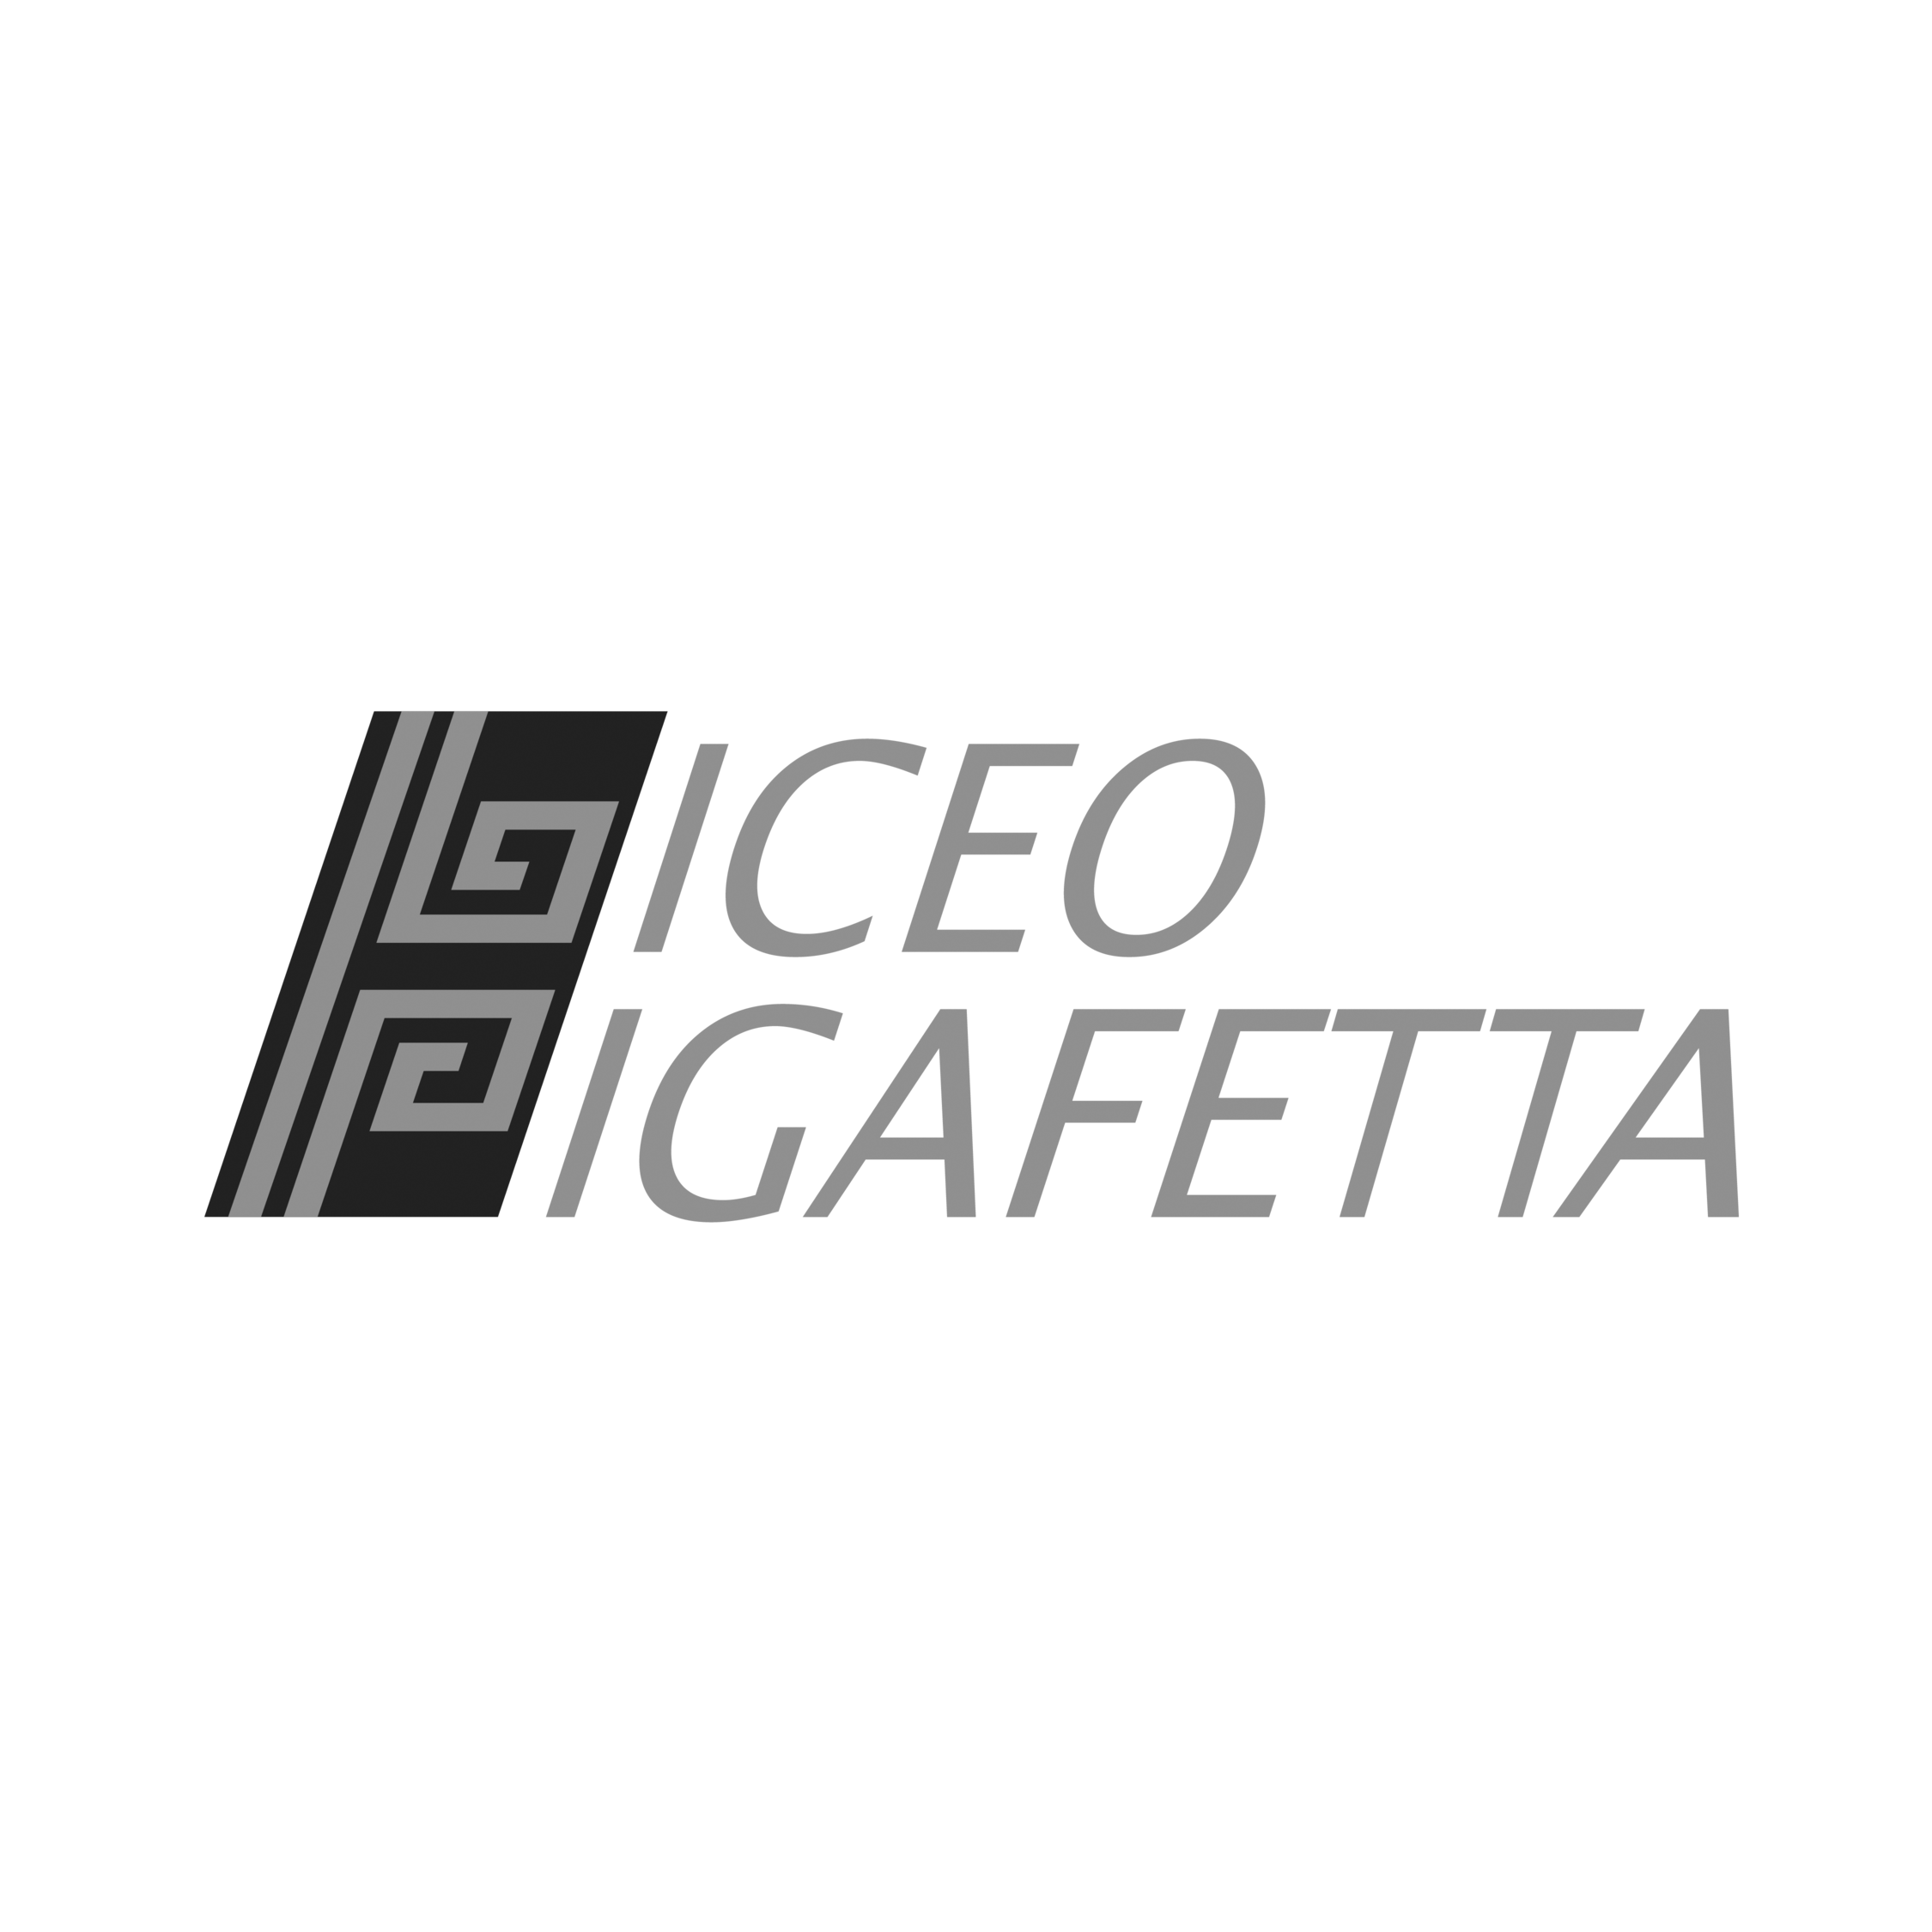 Logo LICEO PIGAFETTA